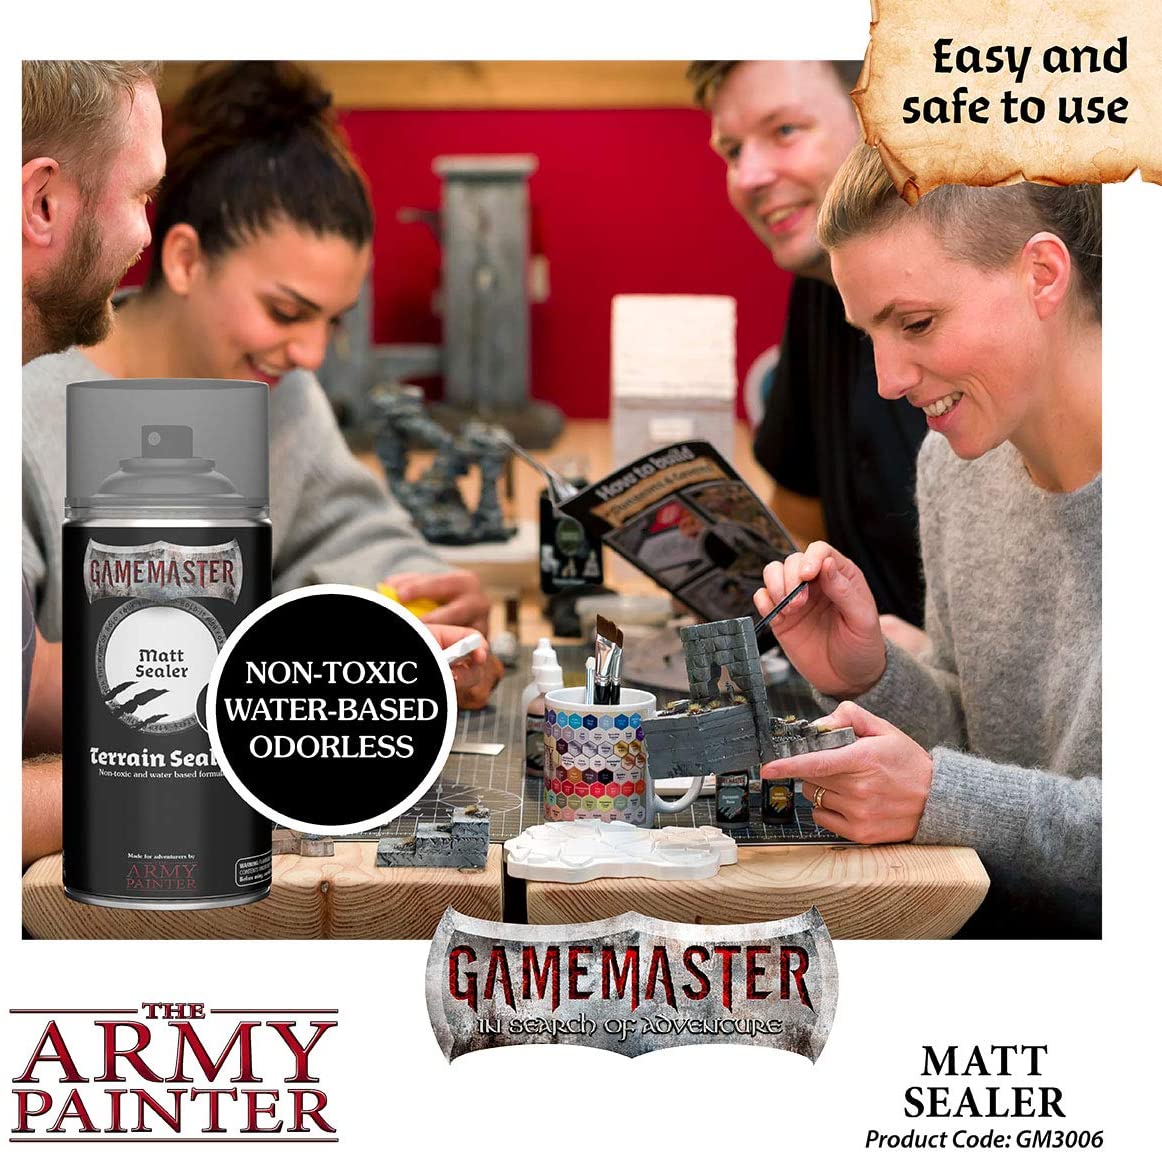 The Army Painter - Gamemaster: Matt Sealer